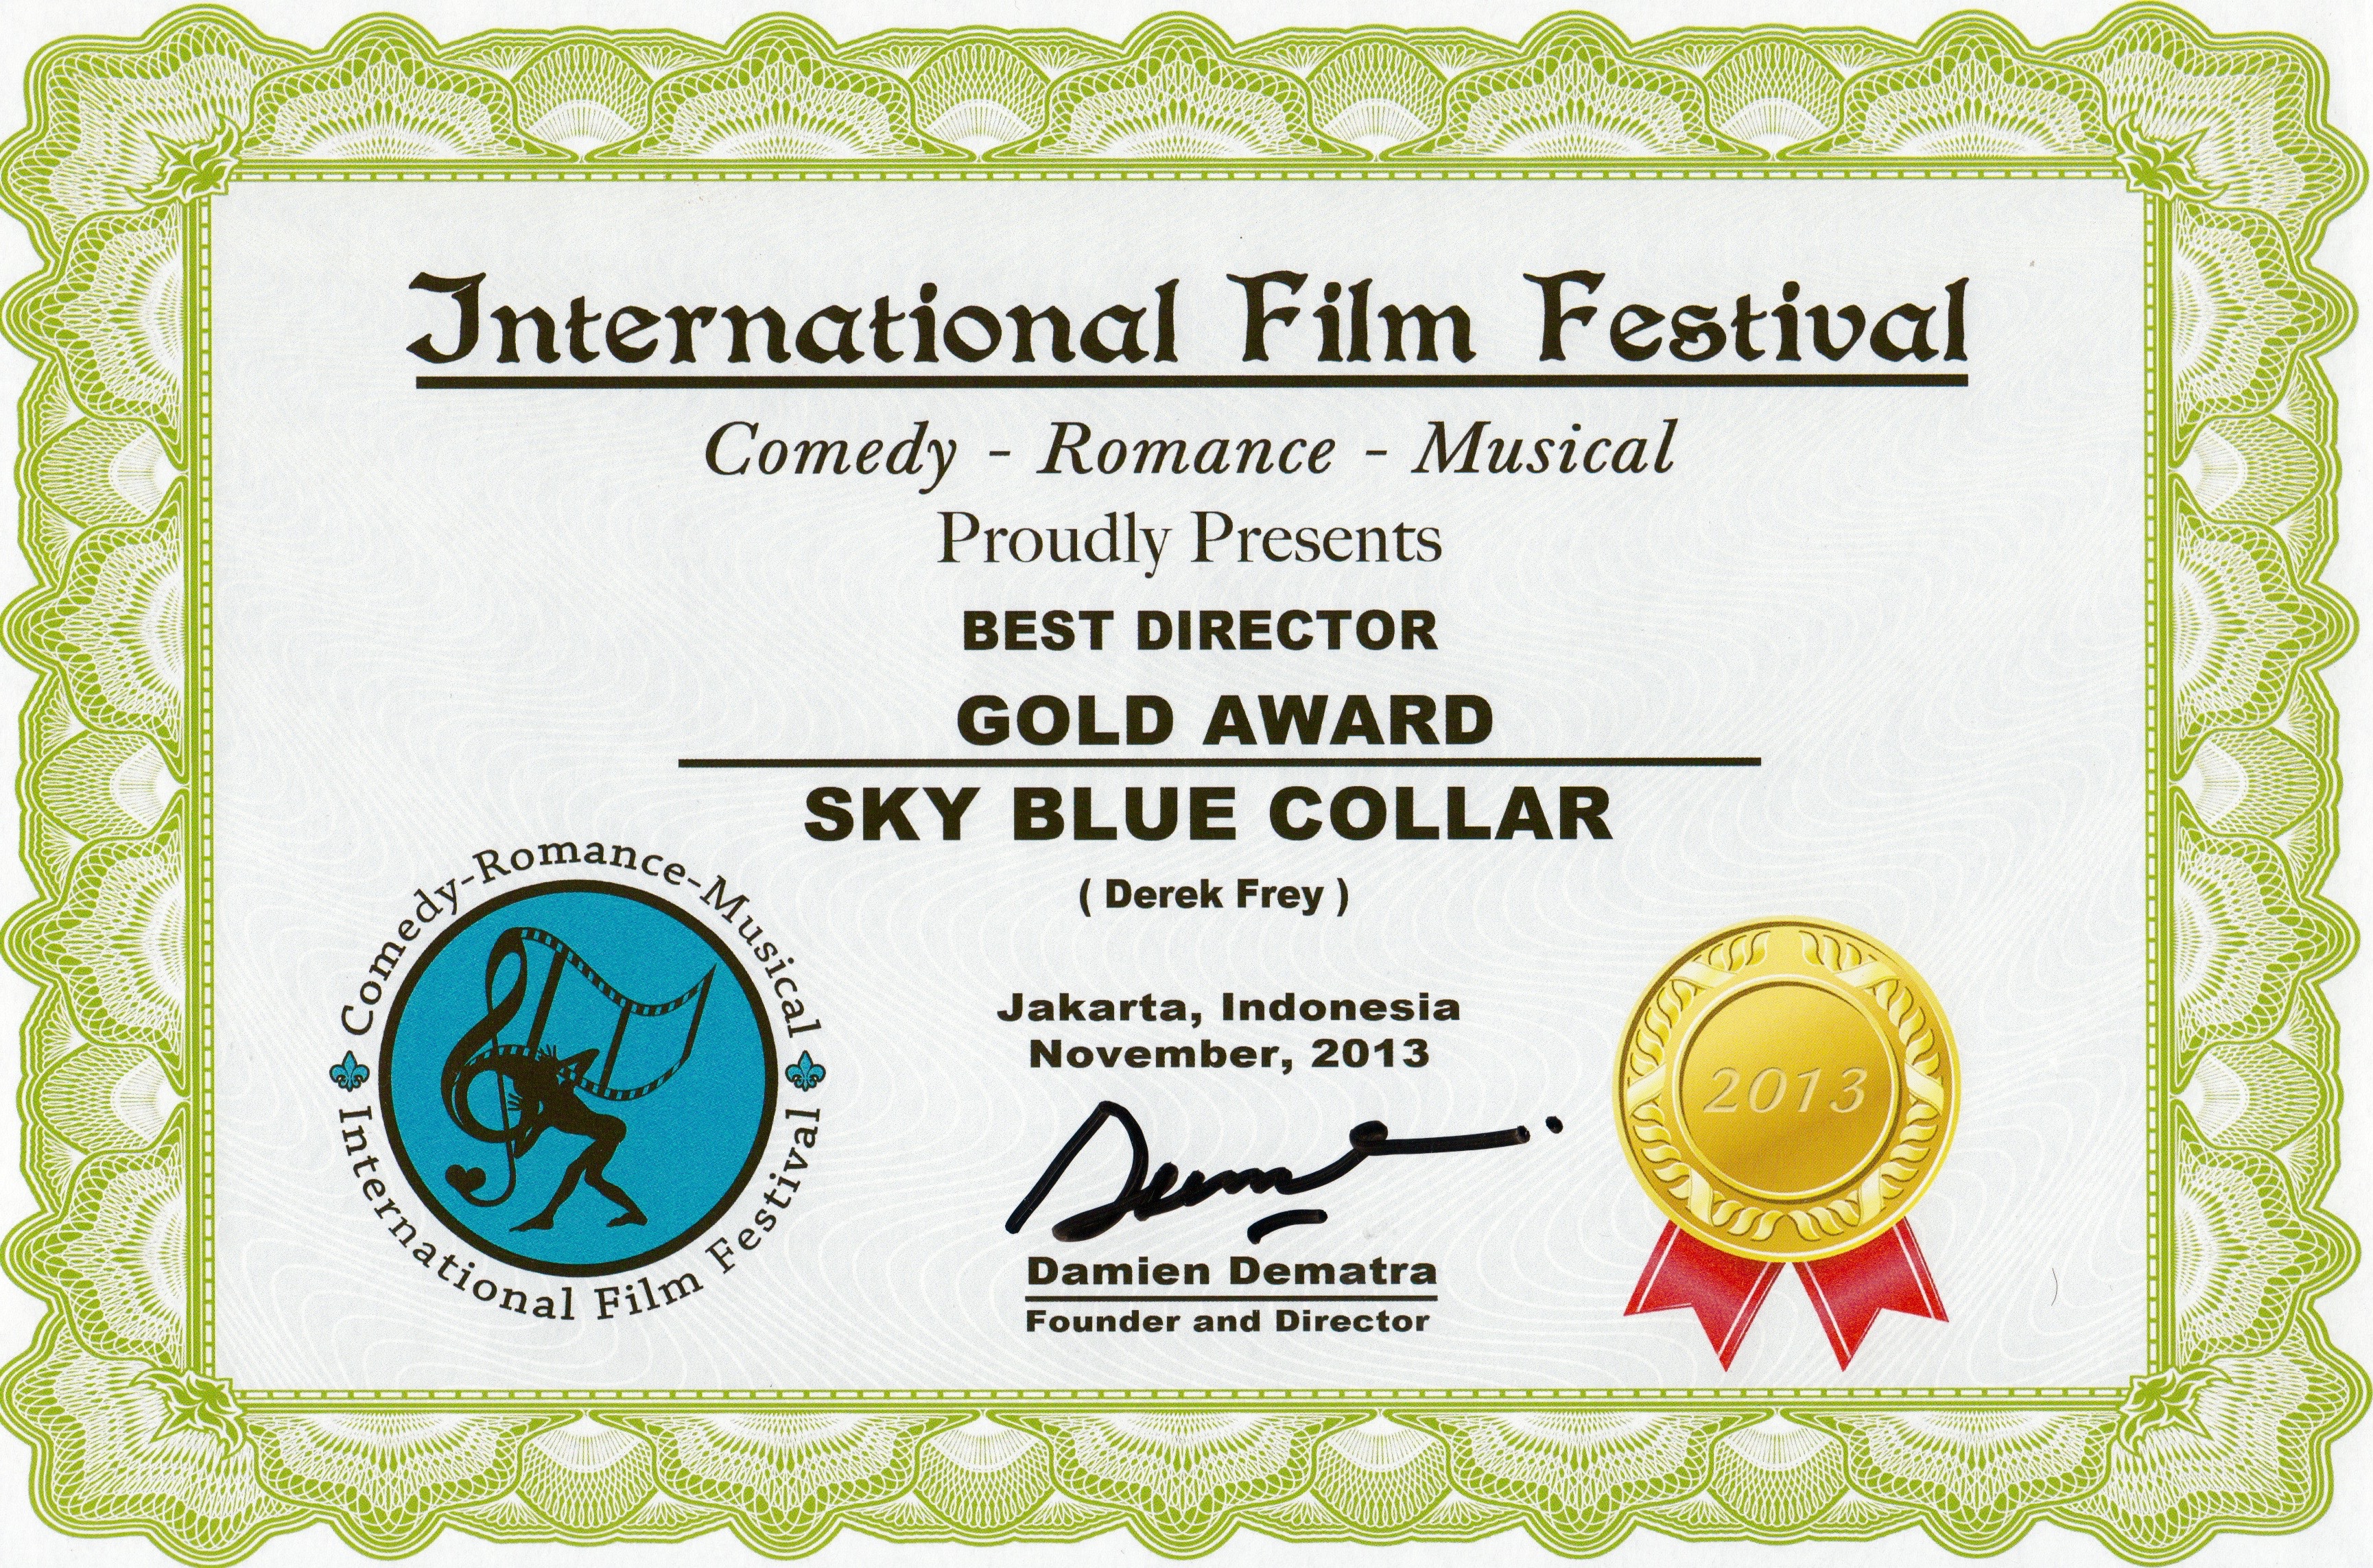 Best Director - Derek Frey - Sky Blue Collar